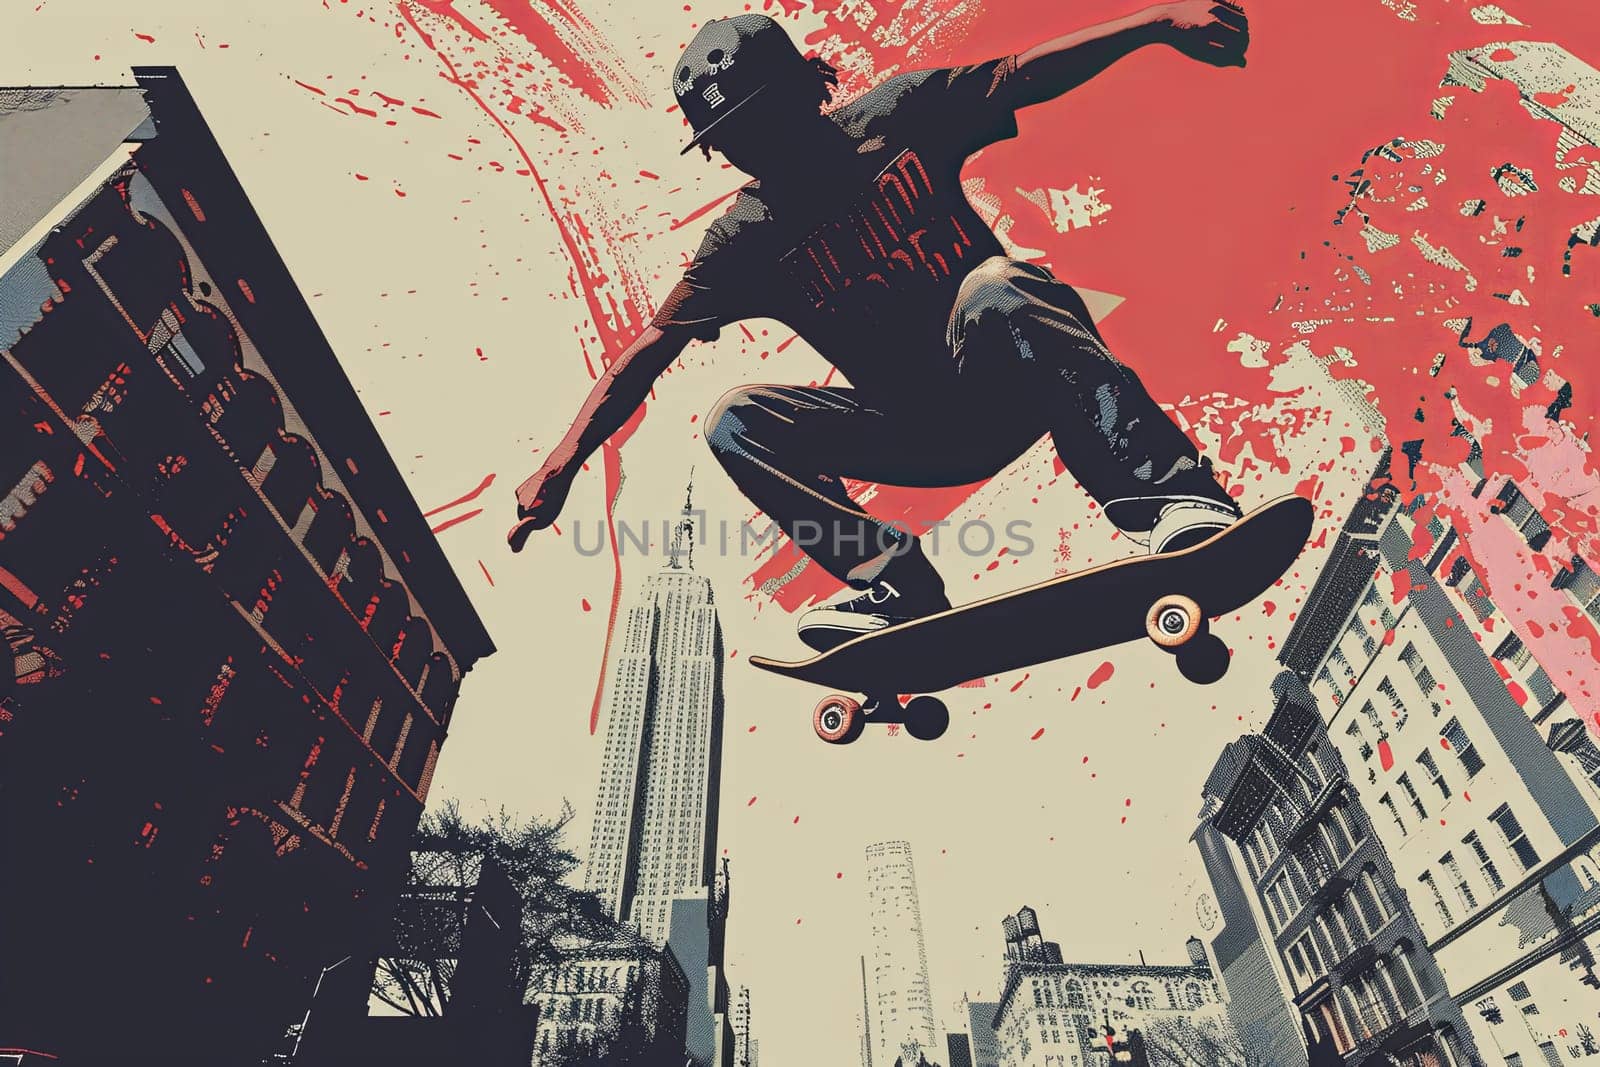 A man propelled through the air while riding a skateboard, executing a trick in an urban setting.